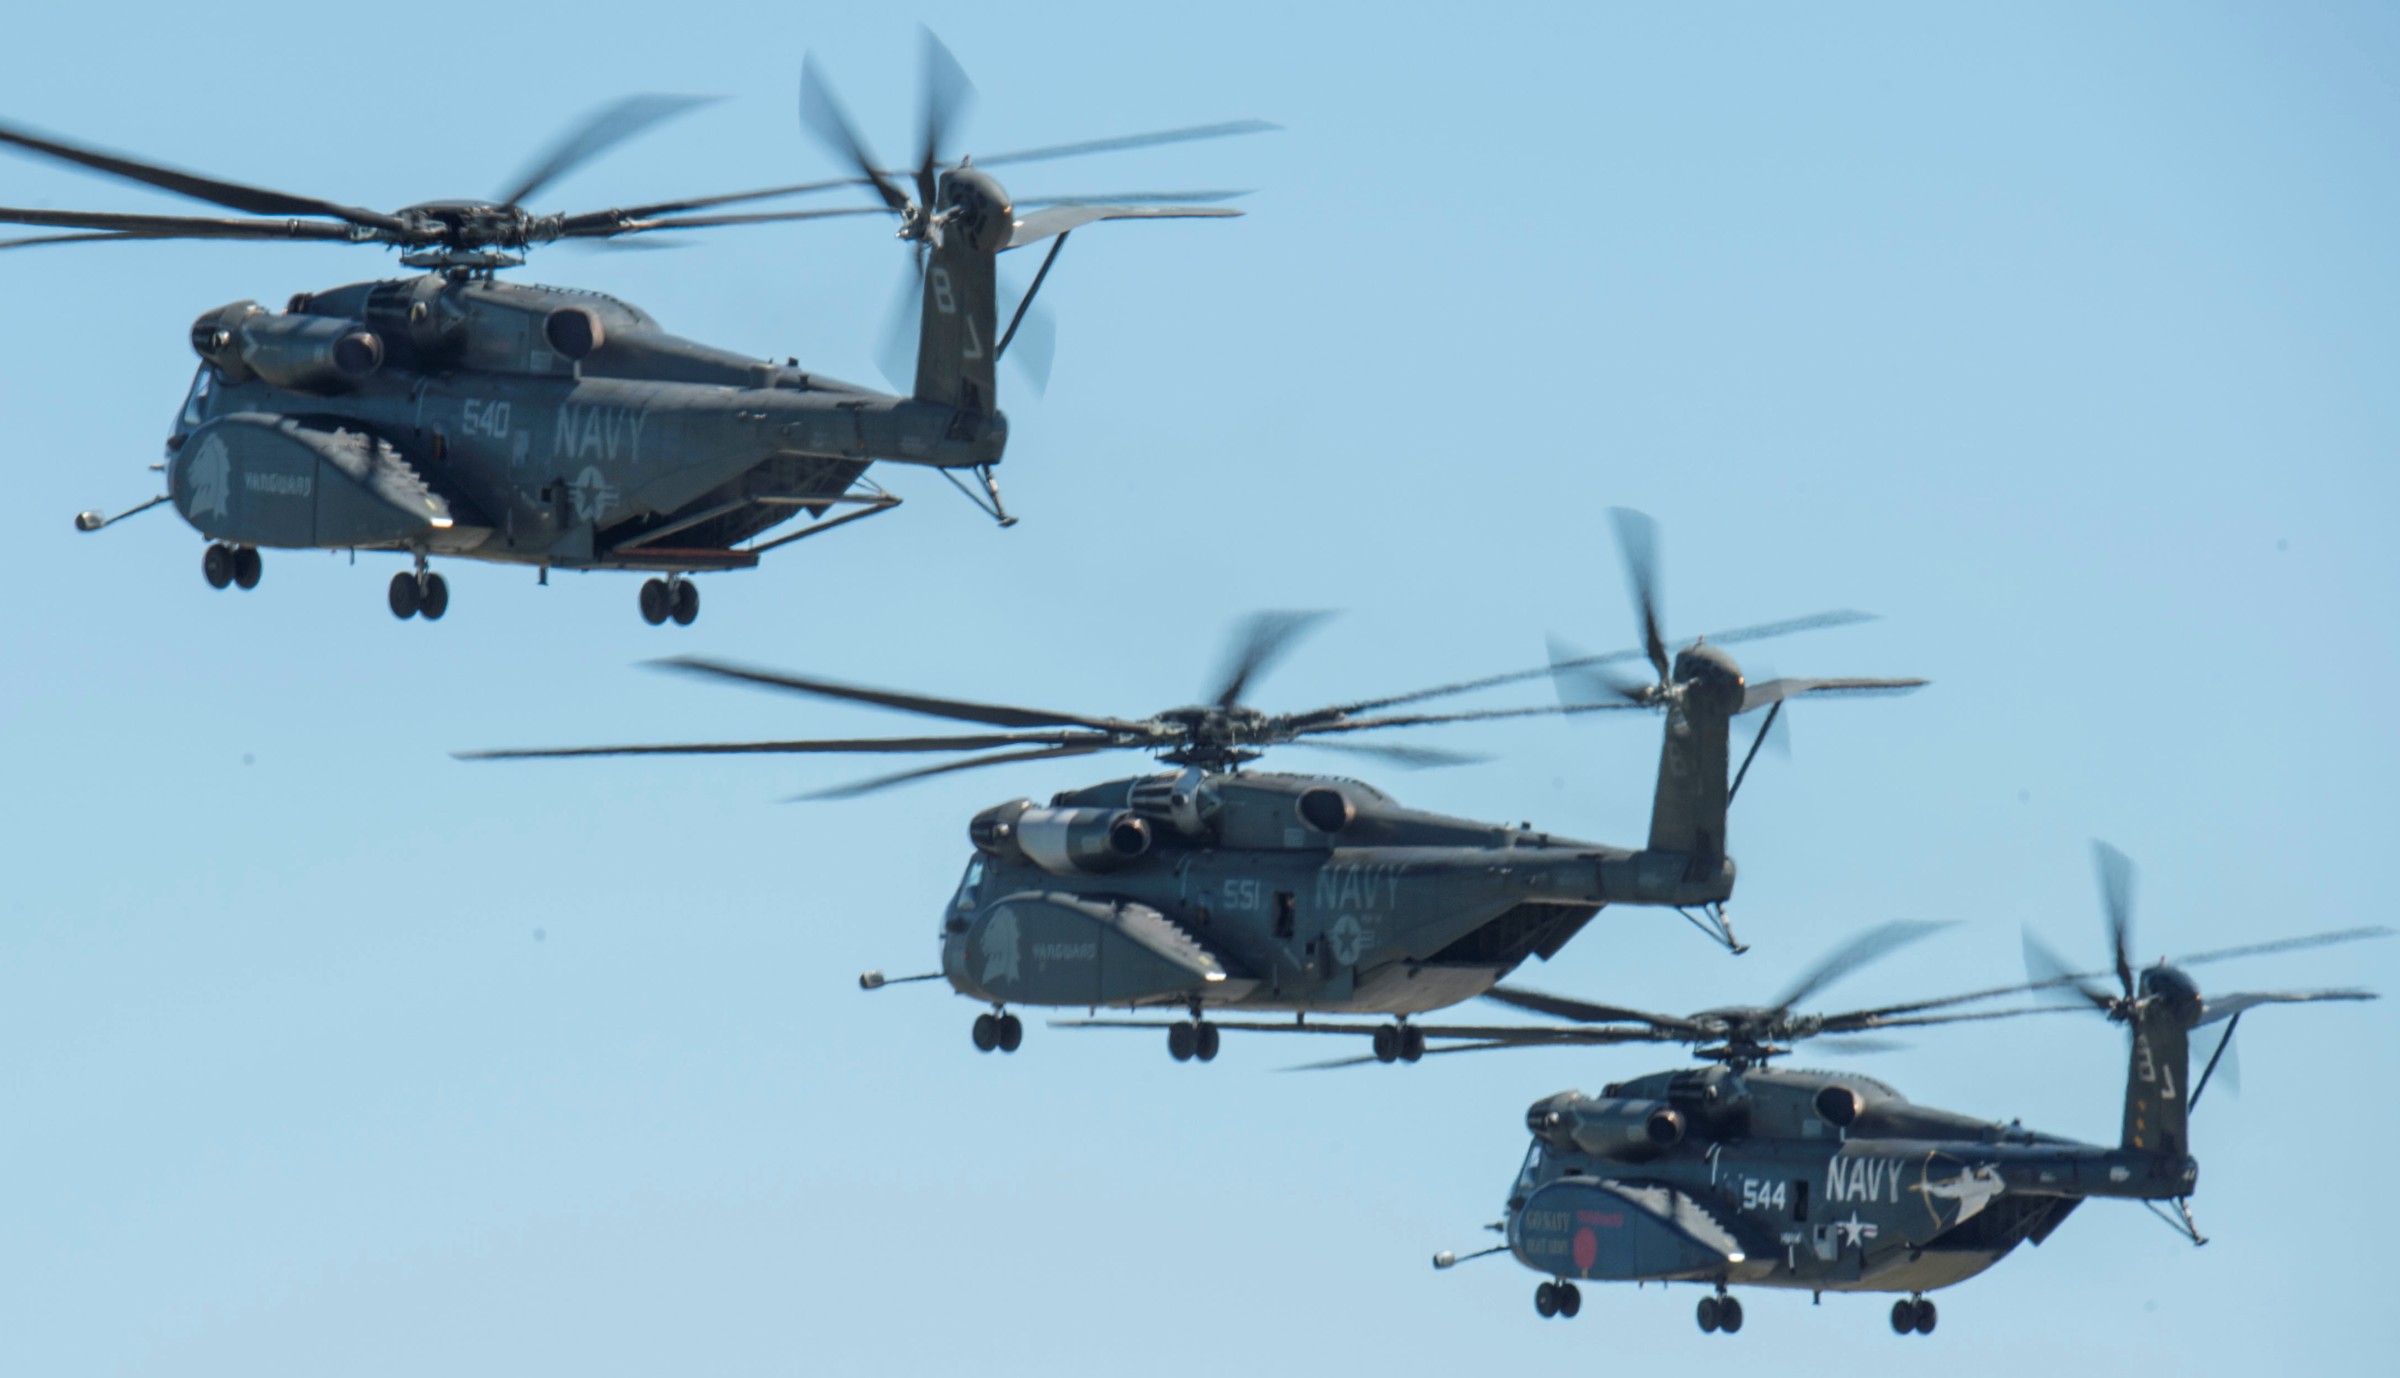 hm-14 vanguard helicopter mine countermeasures squadron navy mh-53e sea dragon 23